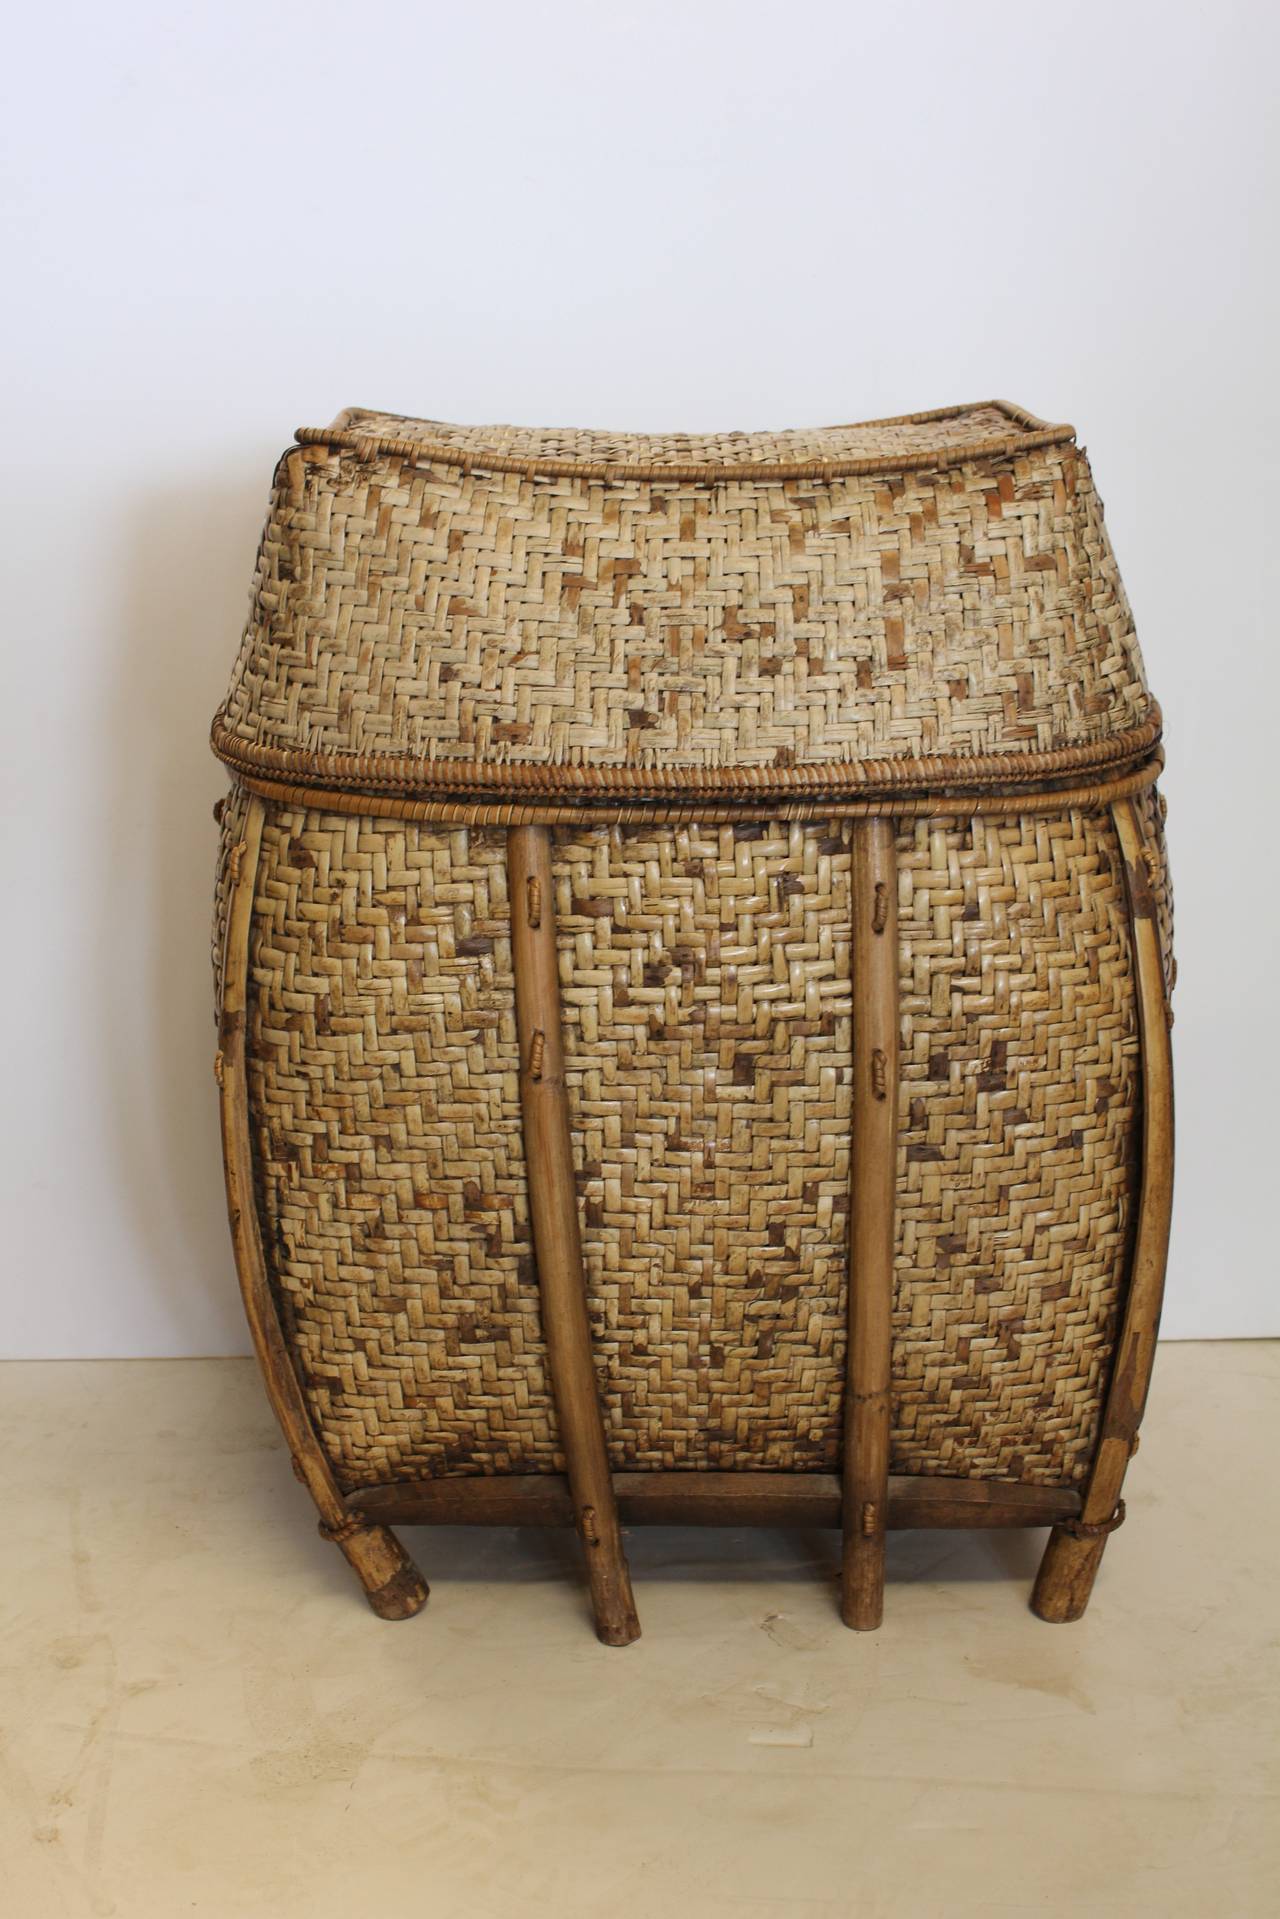 Large decorative Asian lidded woven basket.